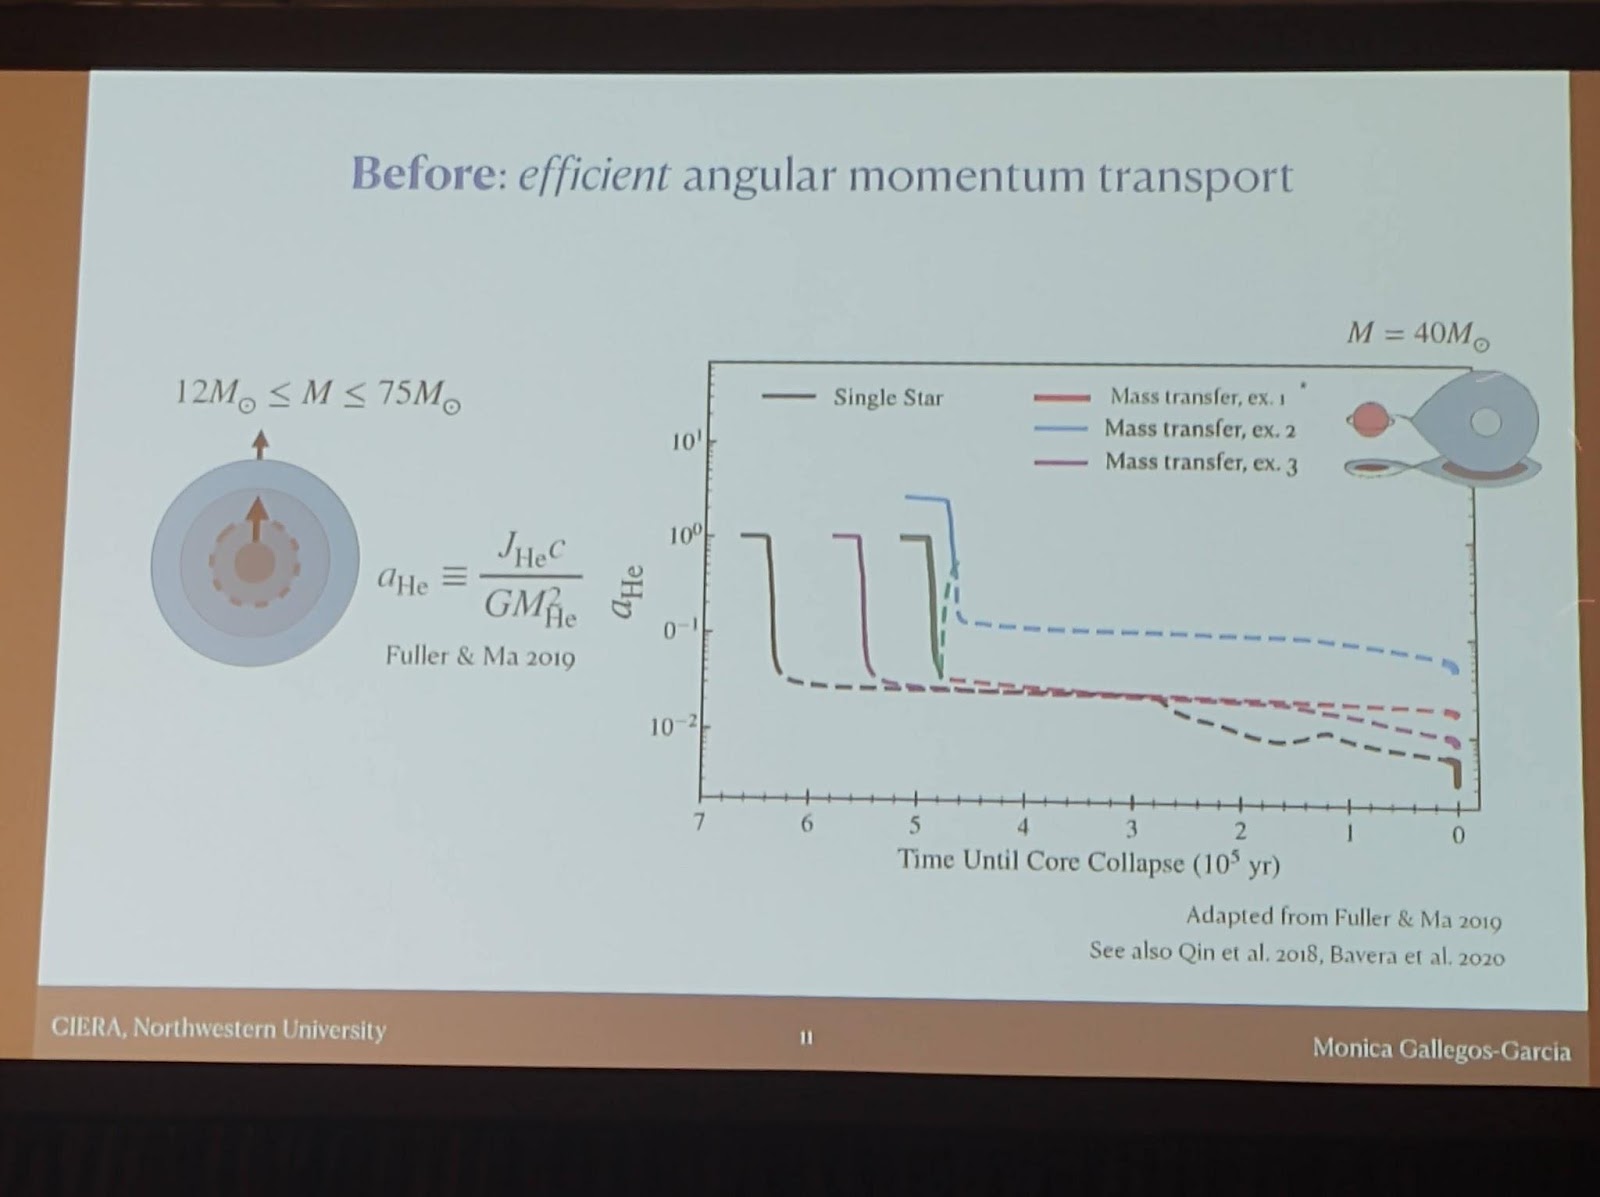 Slide showing the efficient angular momentum transport